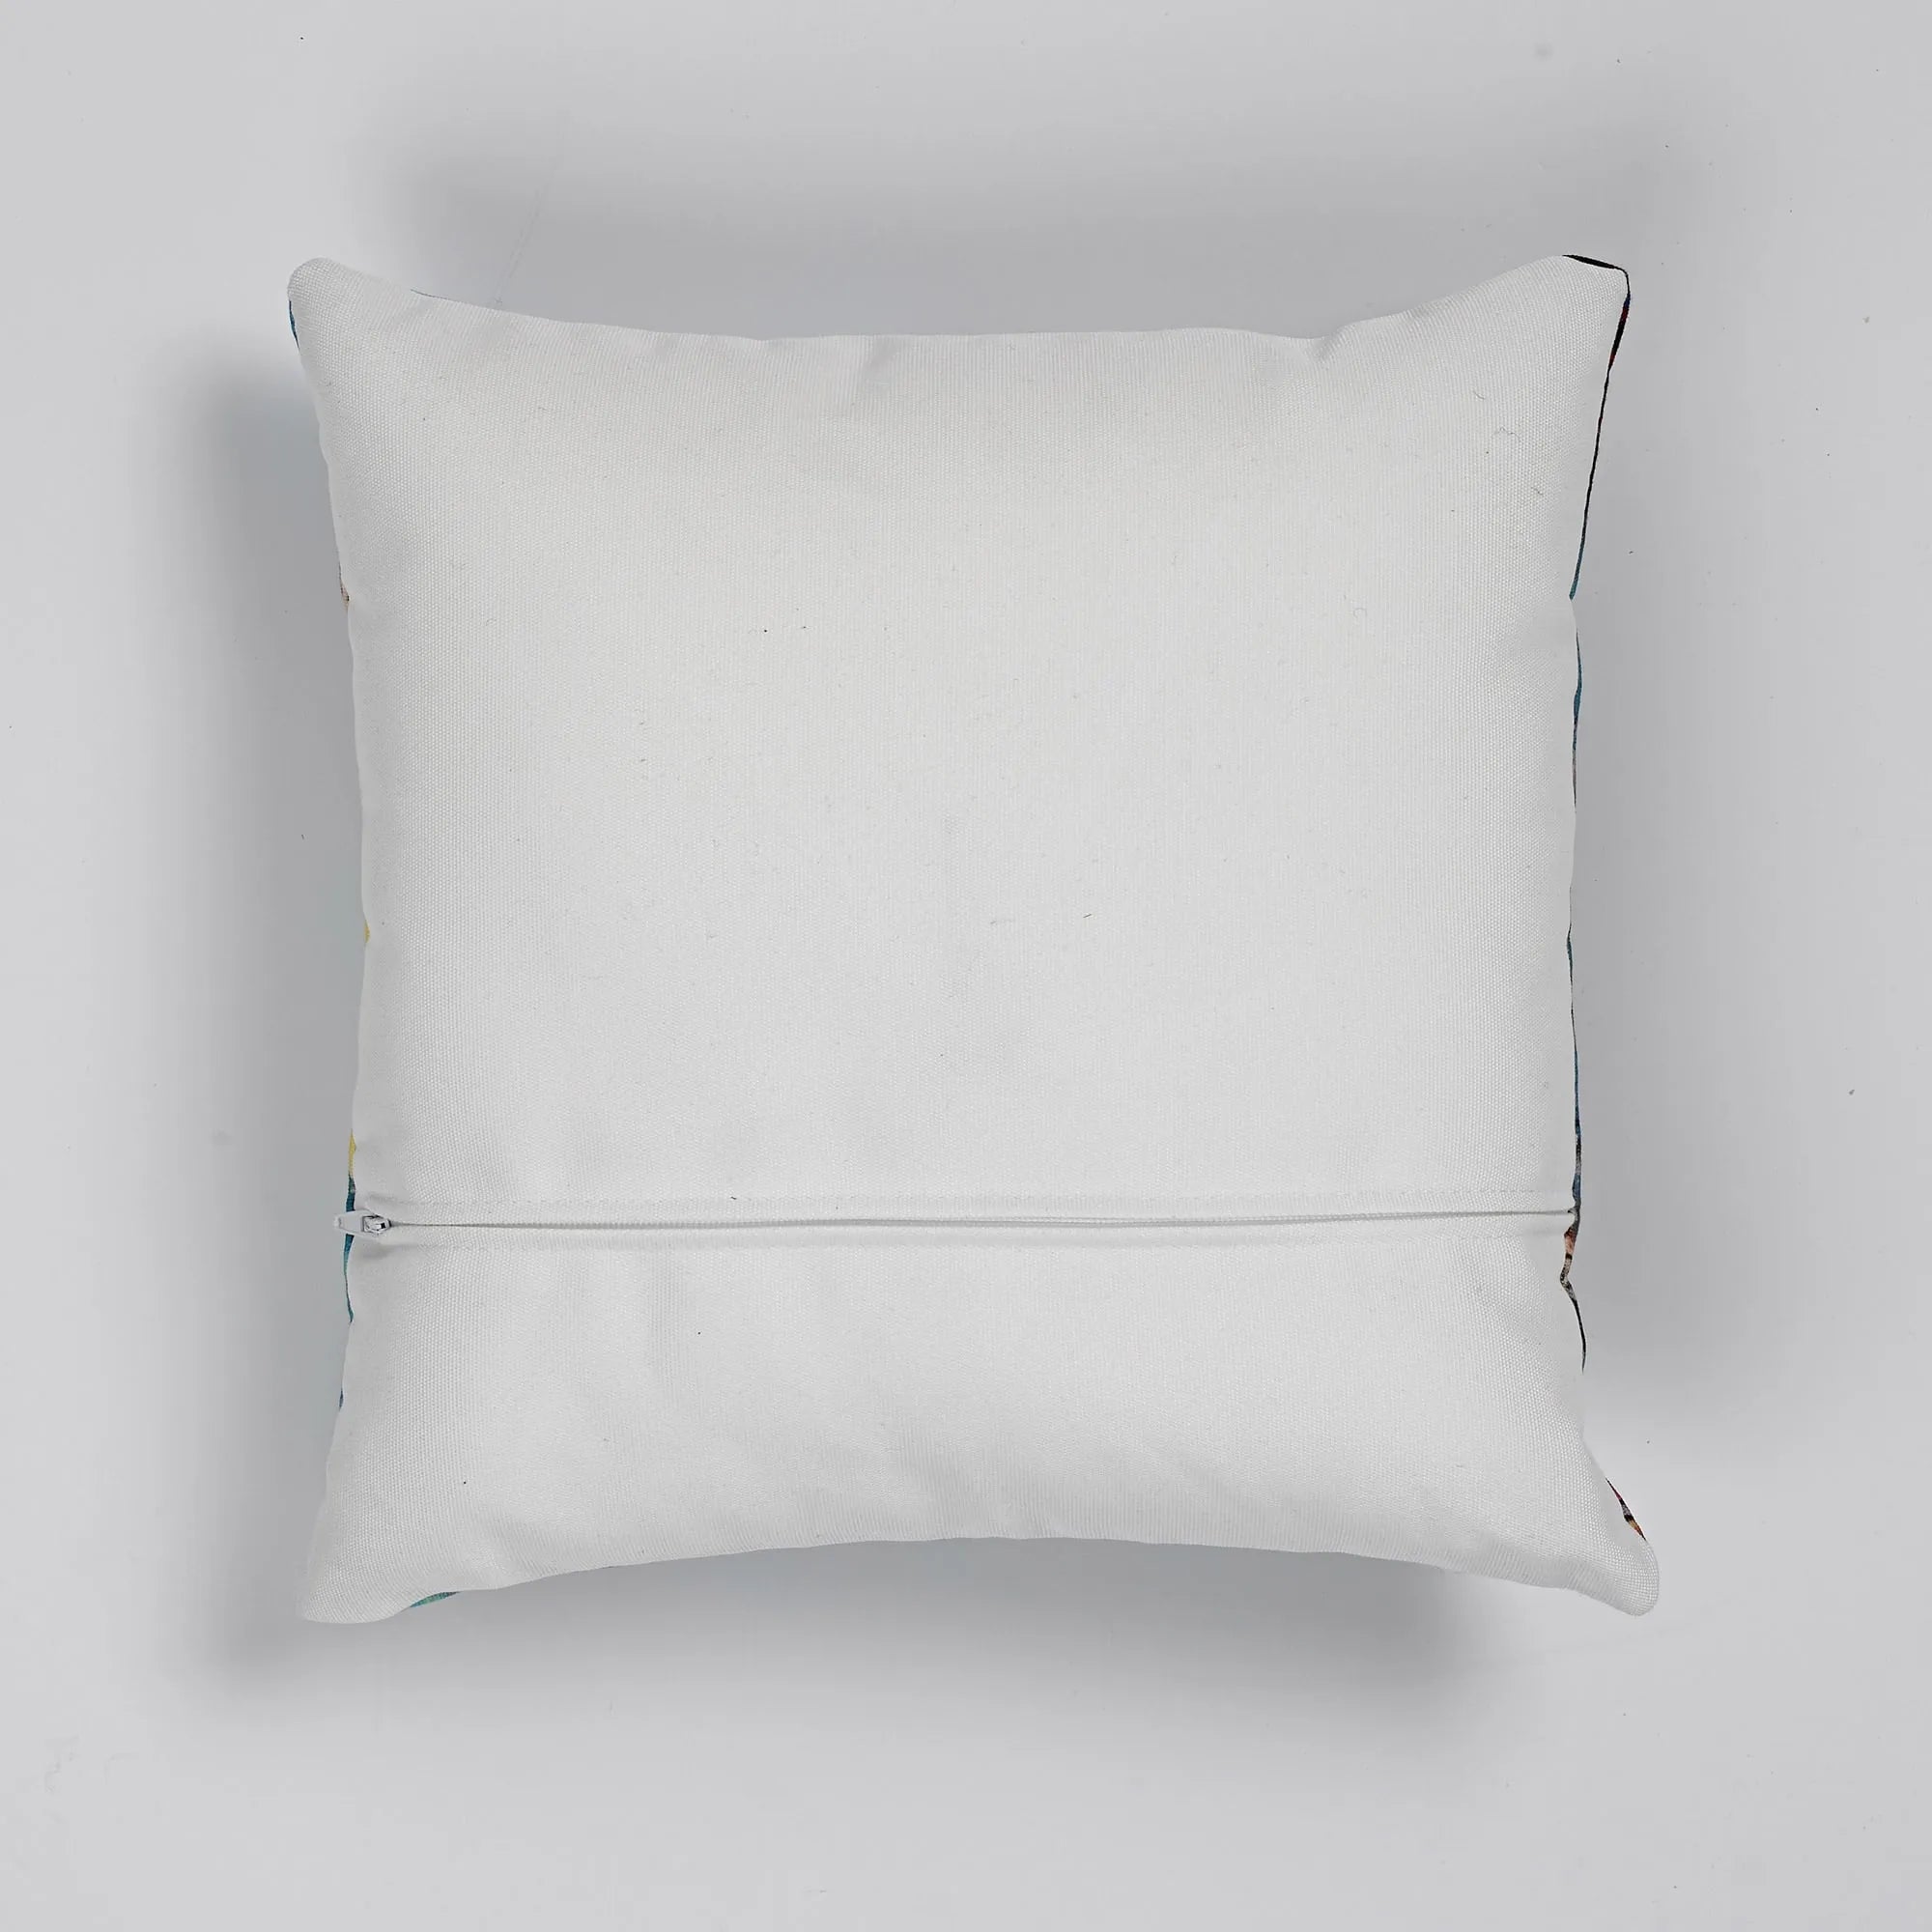 Oiseaux - mouches Et Orchidées - Maurice Pillard Verneuil Cushion - Decorative Throw Pillow - Throw Pillows